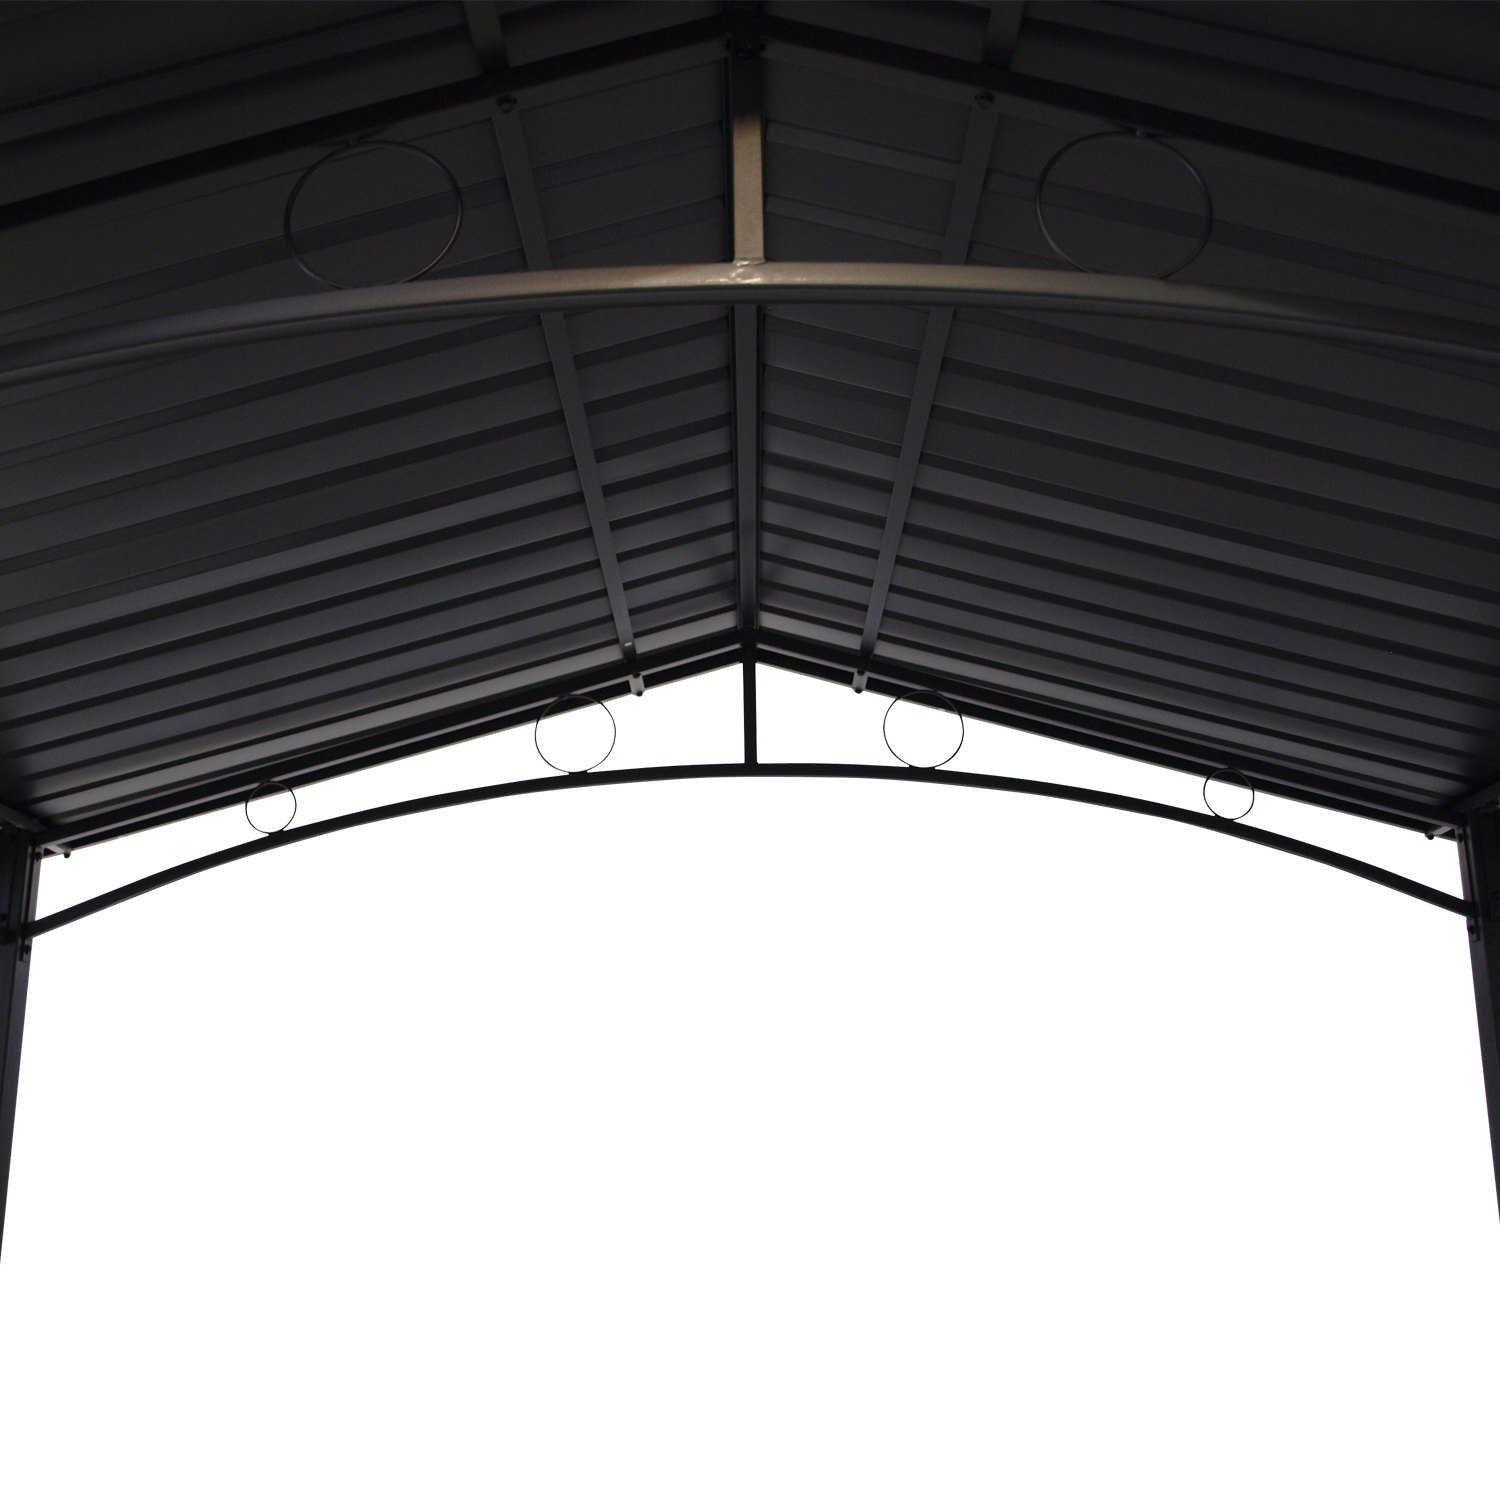 Grillpavillon TOULOUSE 2,5x1,6 Meter, Stahl dunkelgrau, Dach aus Trapezblech